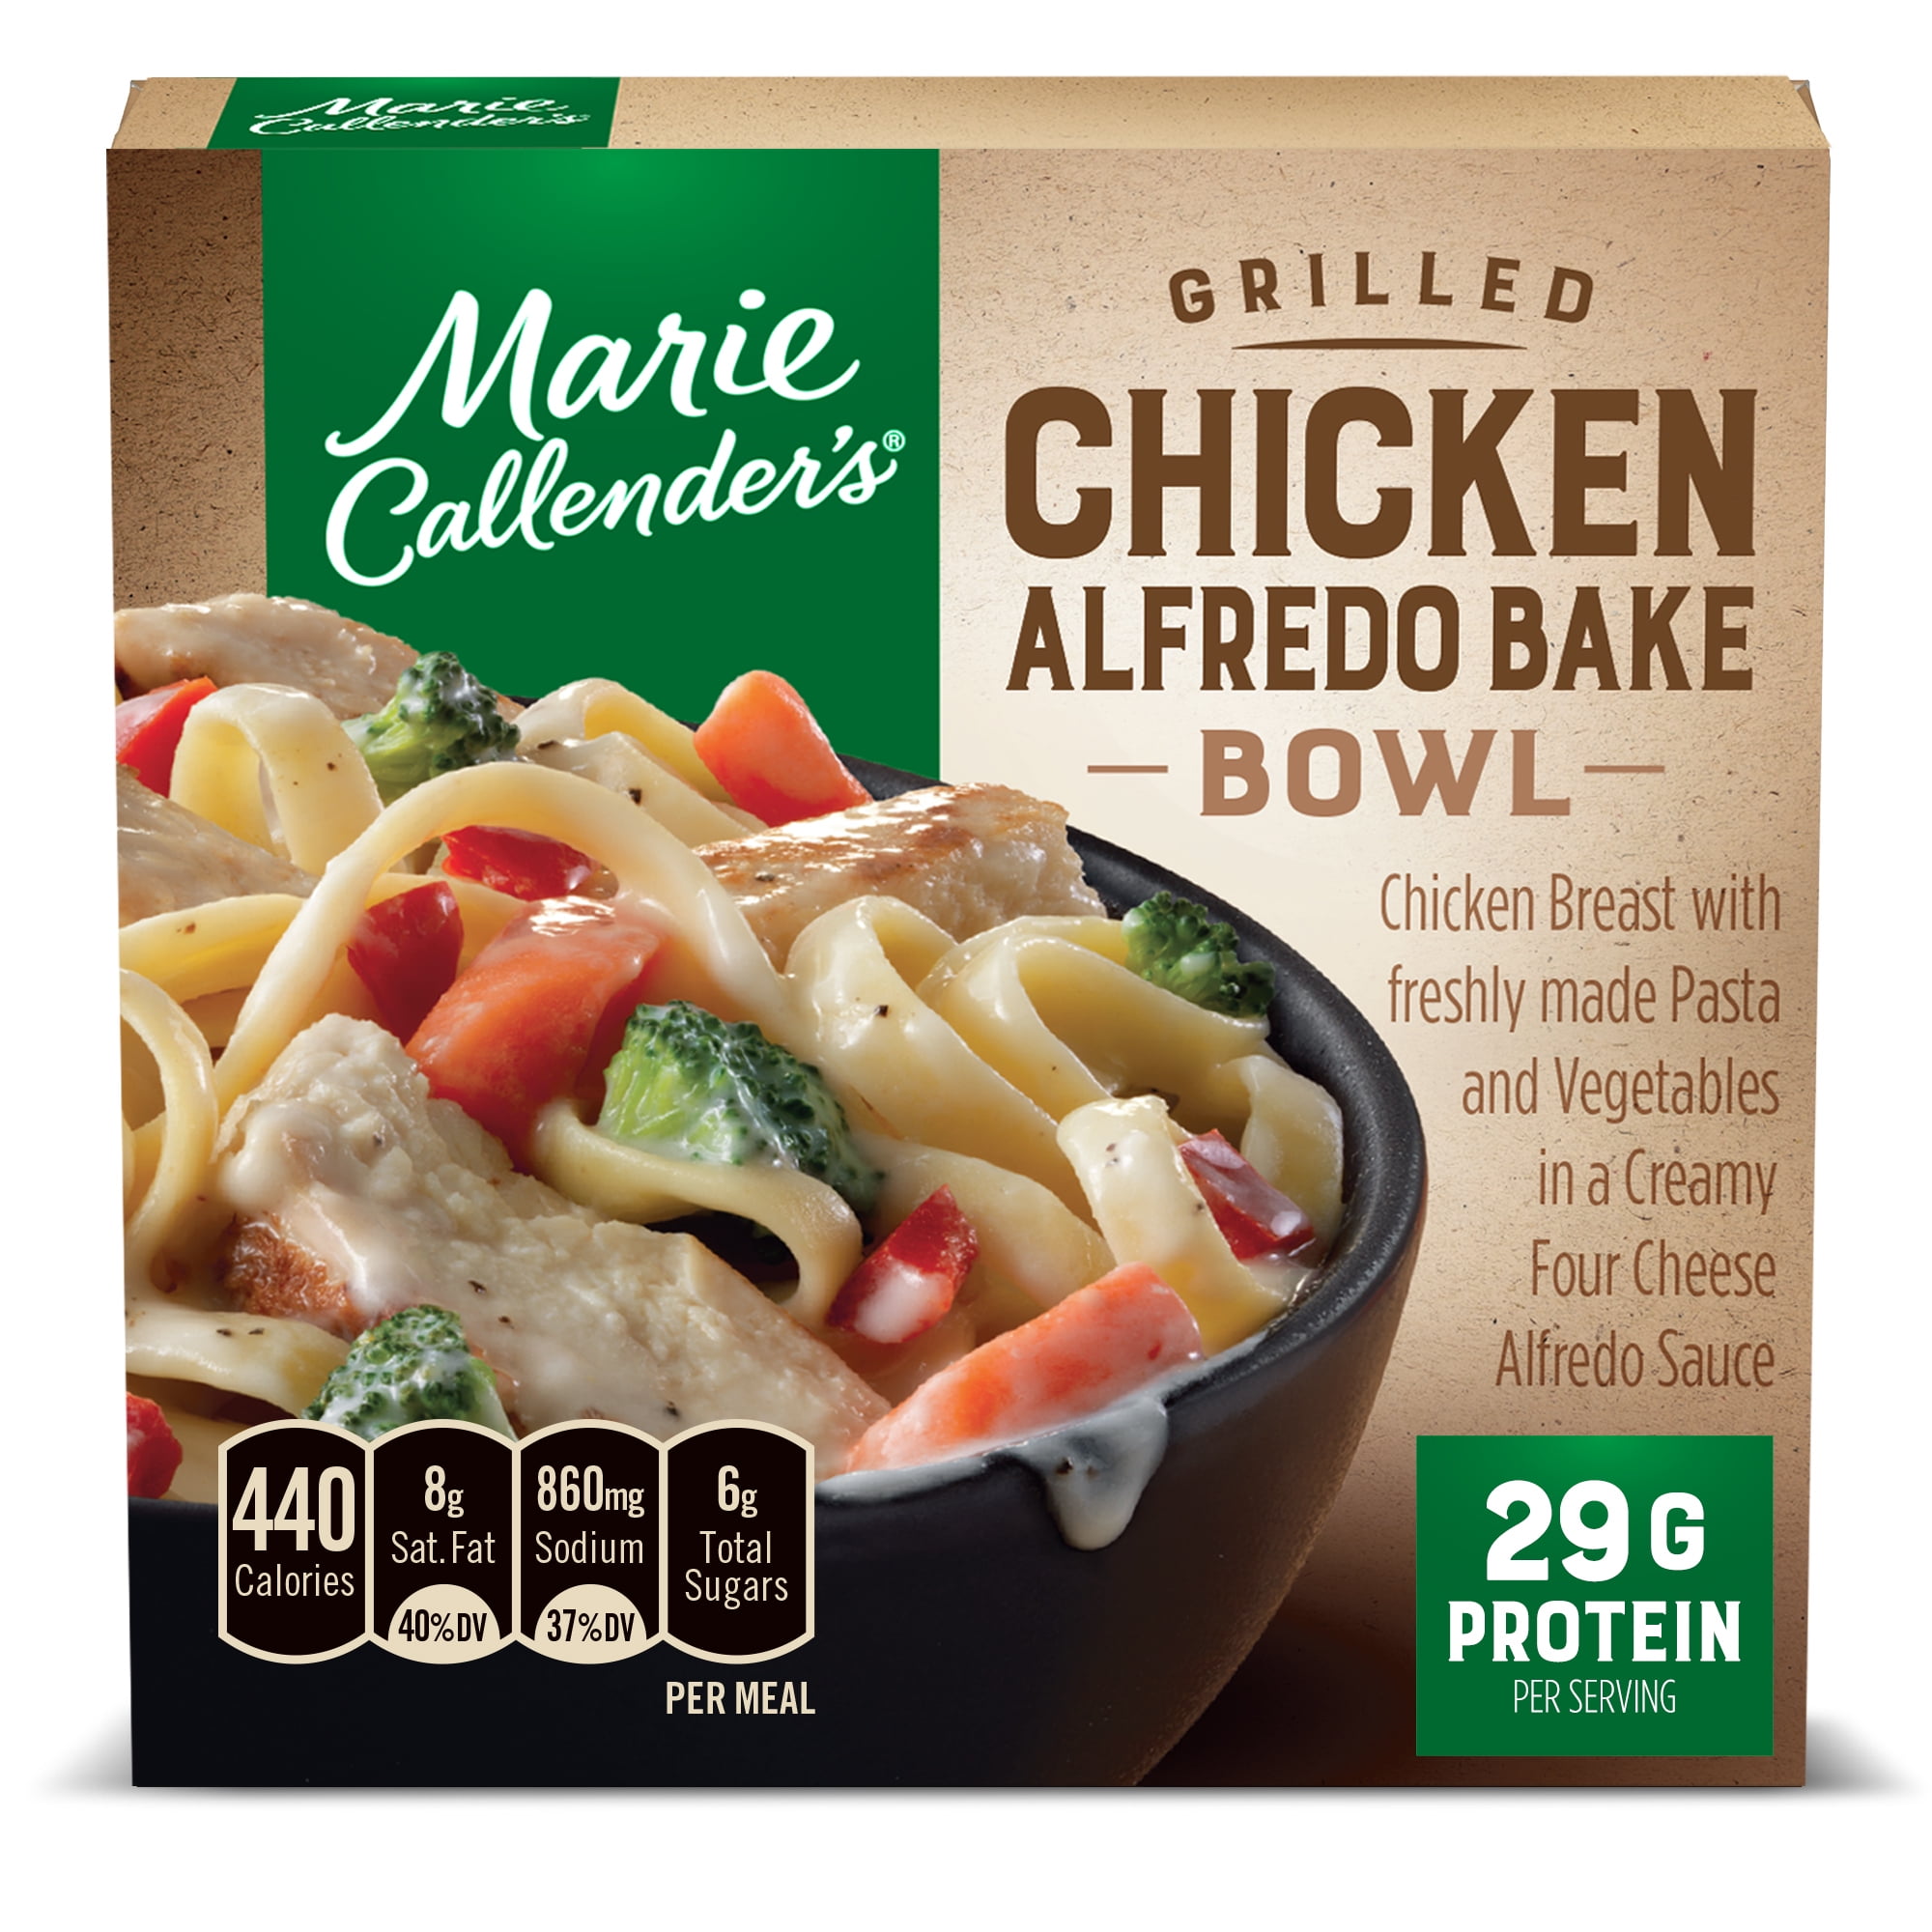 Marie Callender's Grilled Chicken Alfredo Bake Bowl, Frozen Meals, 11.6 oz. - Walmart.com ...